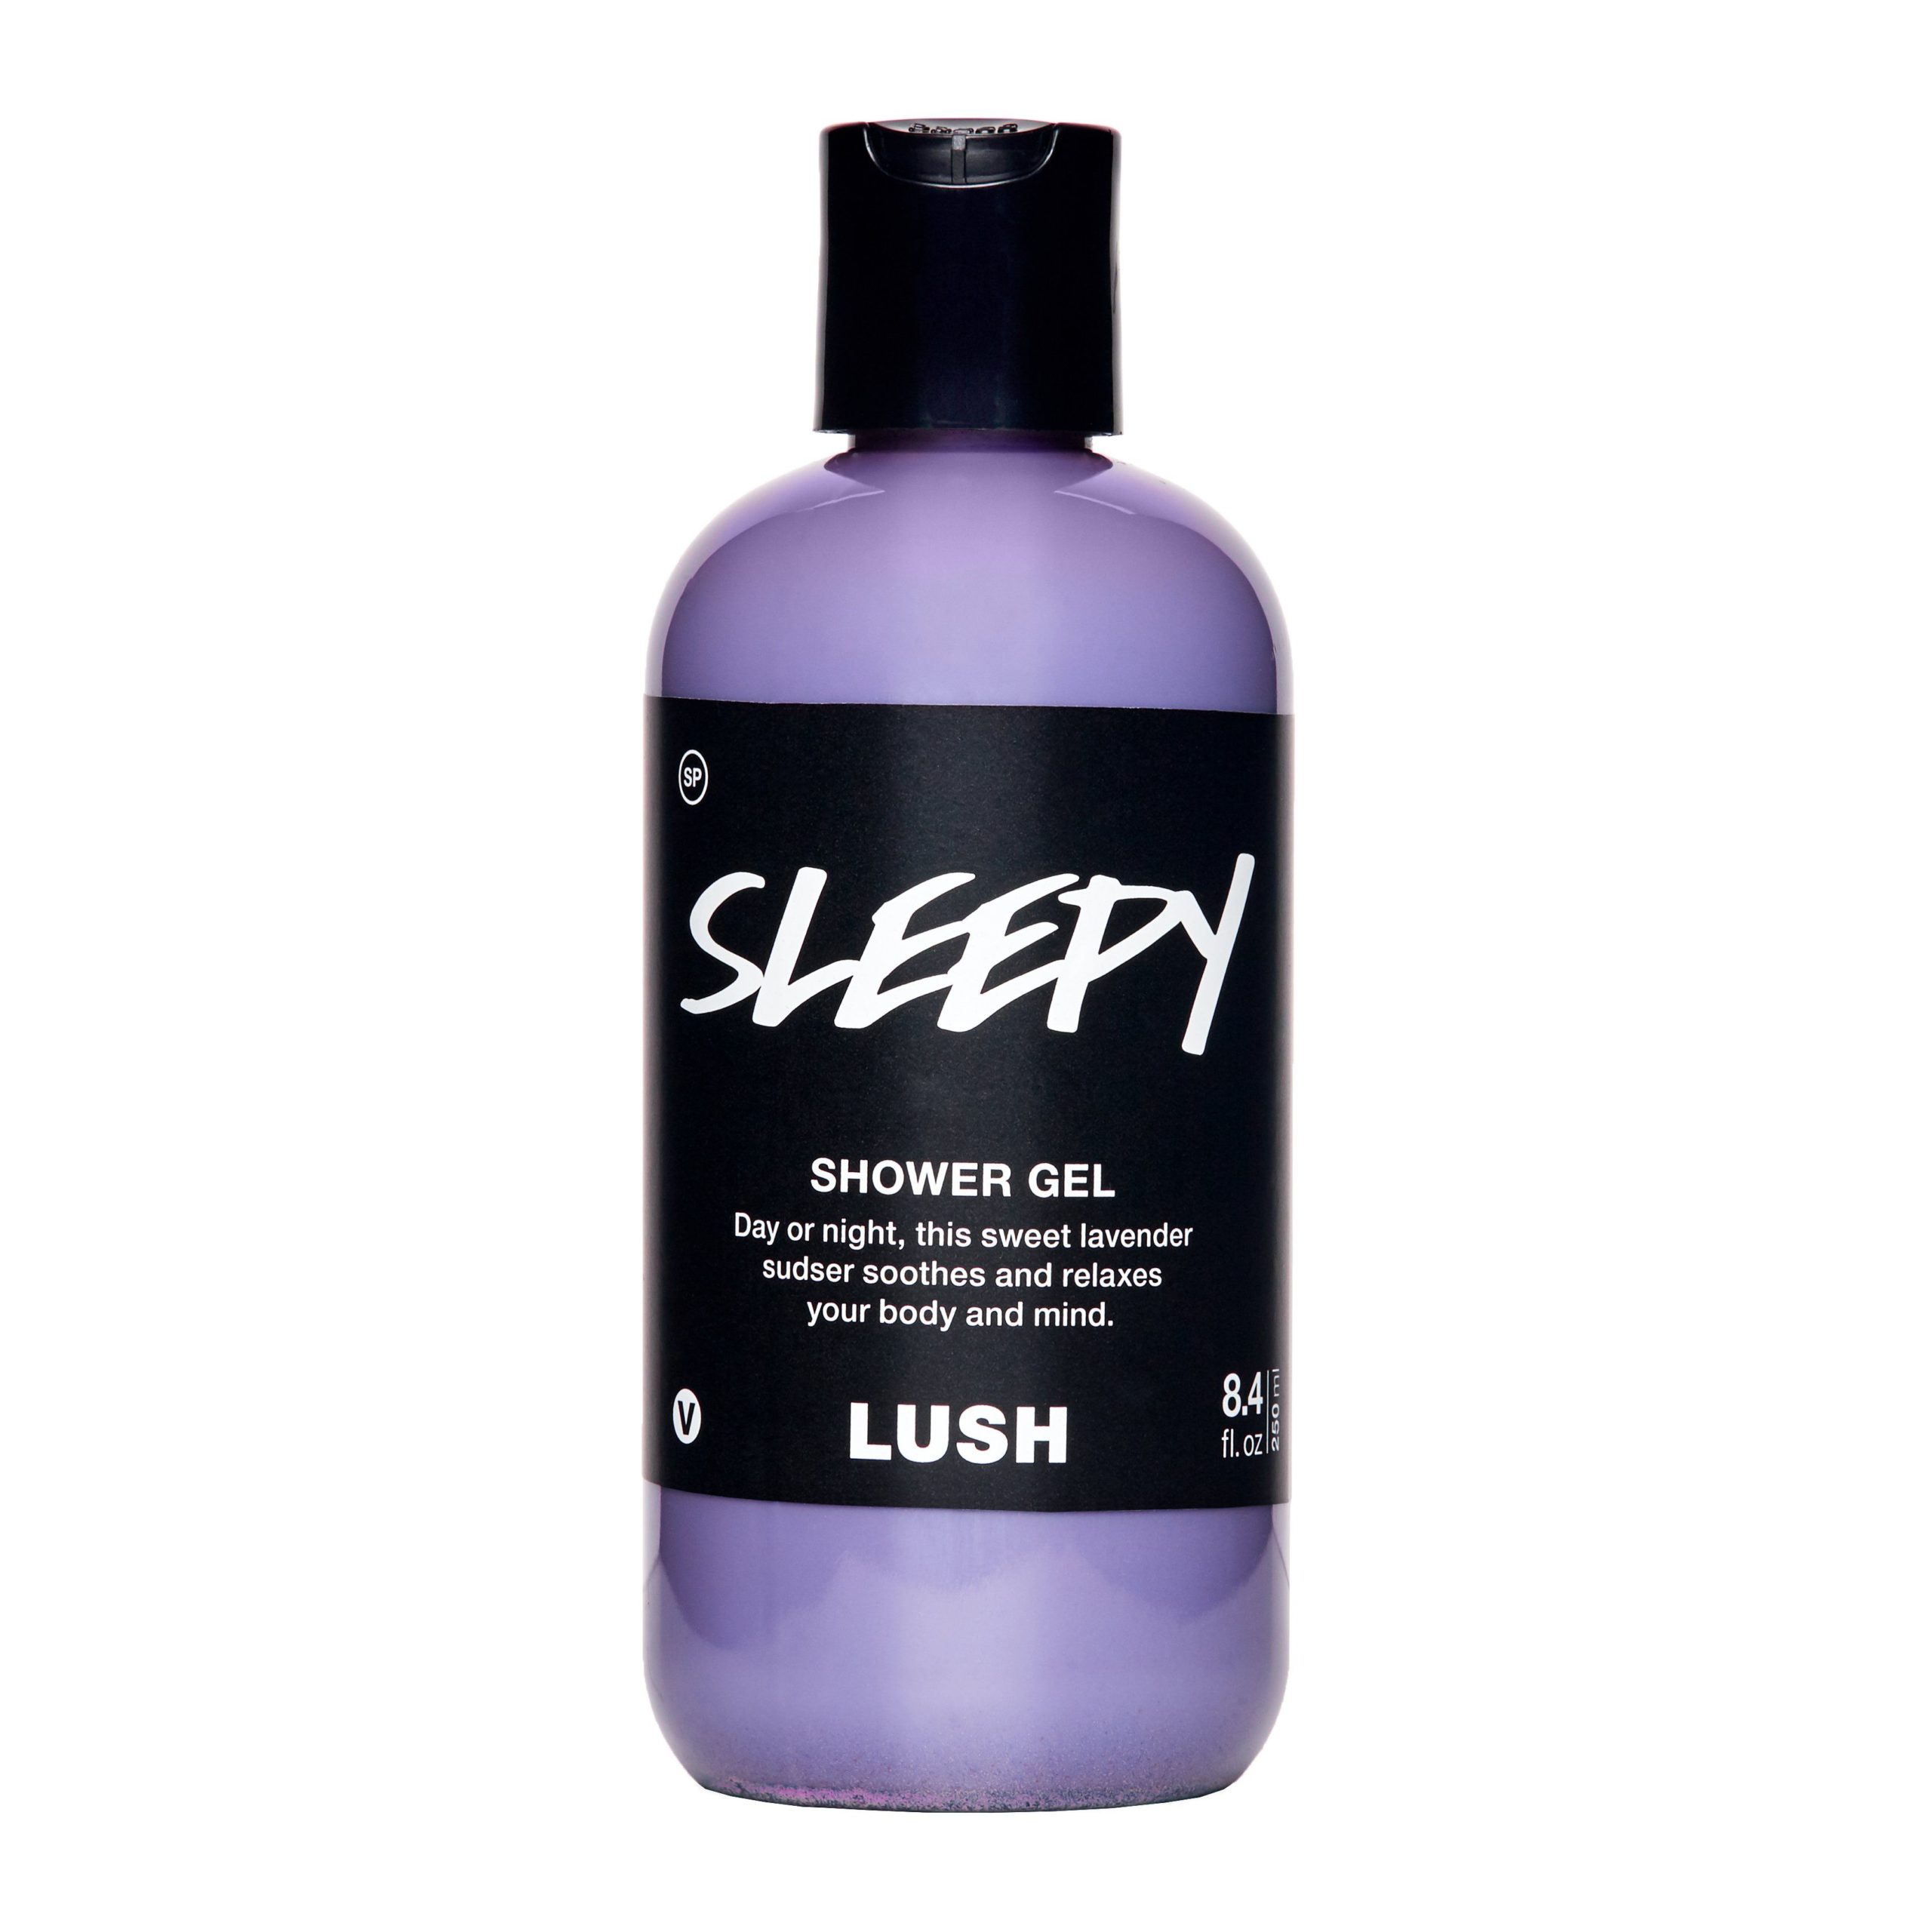 Sleepy Shower Gel 8.4 fl. oz | Cruelty-Free & Fresh Ingredients | Lush Cosmetics